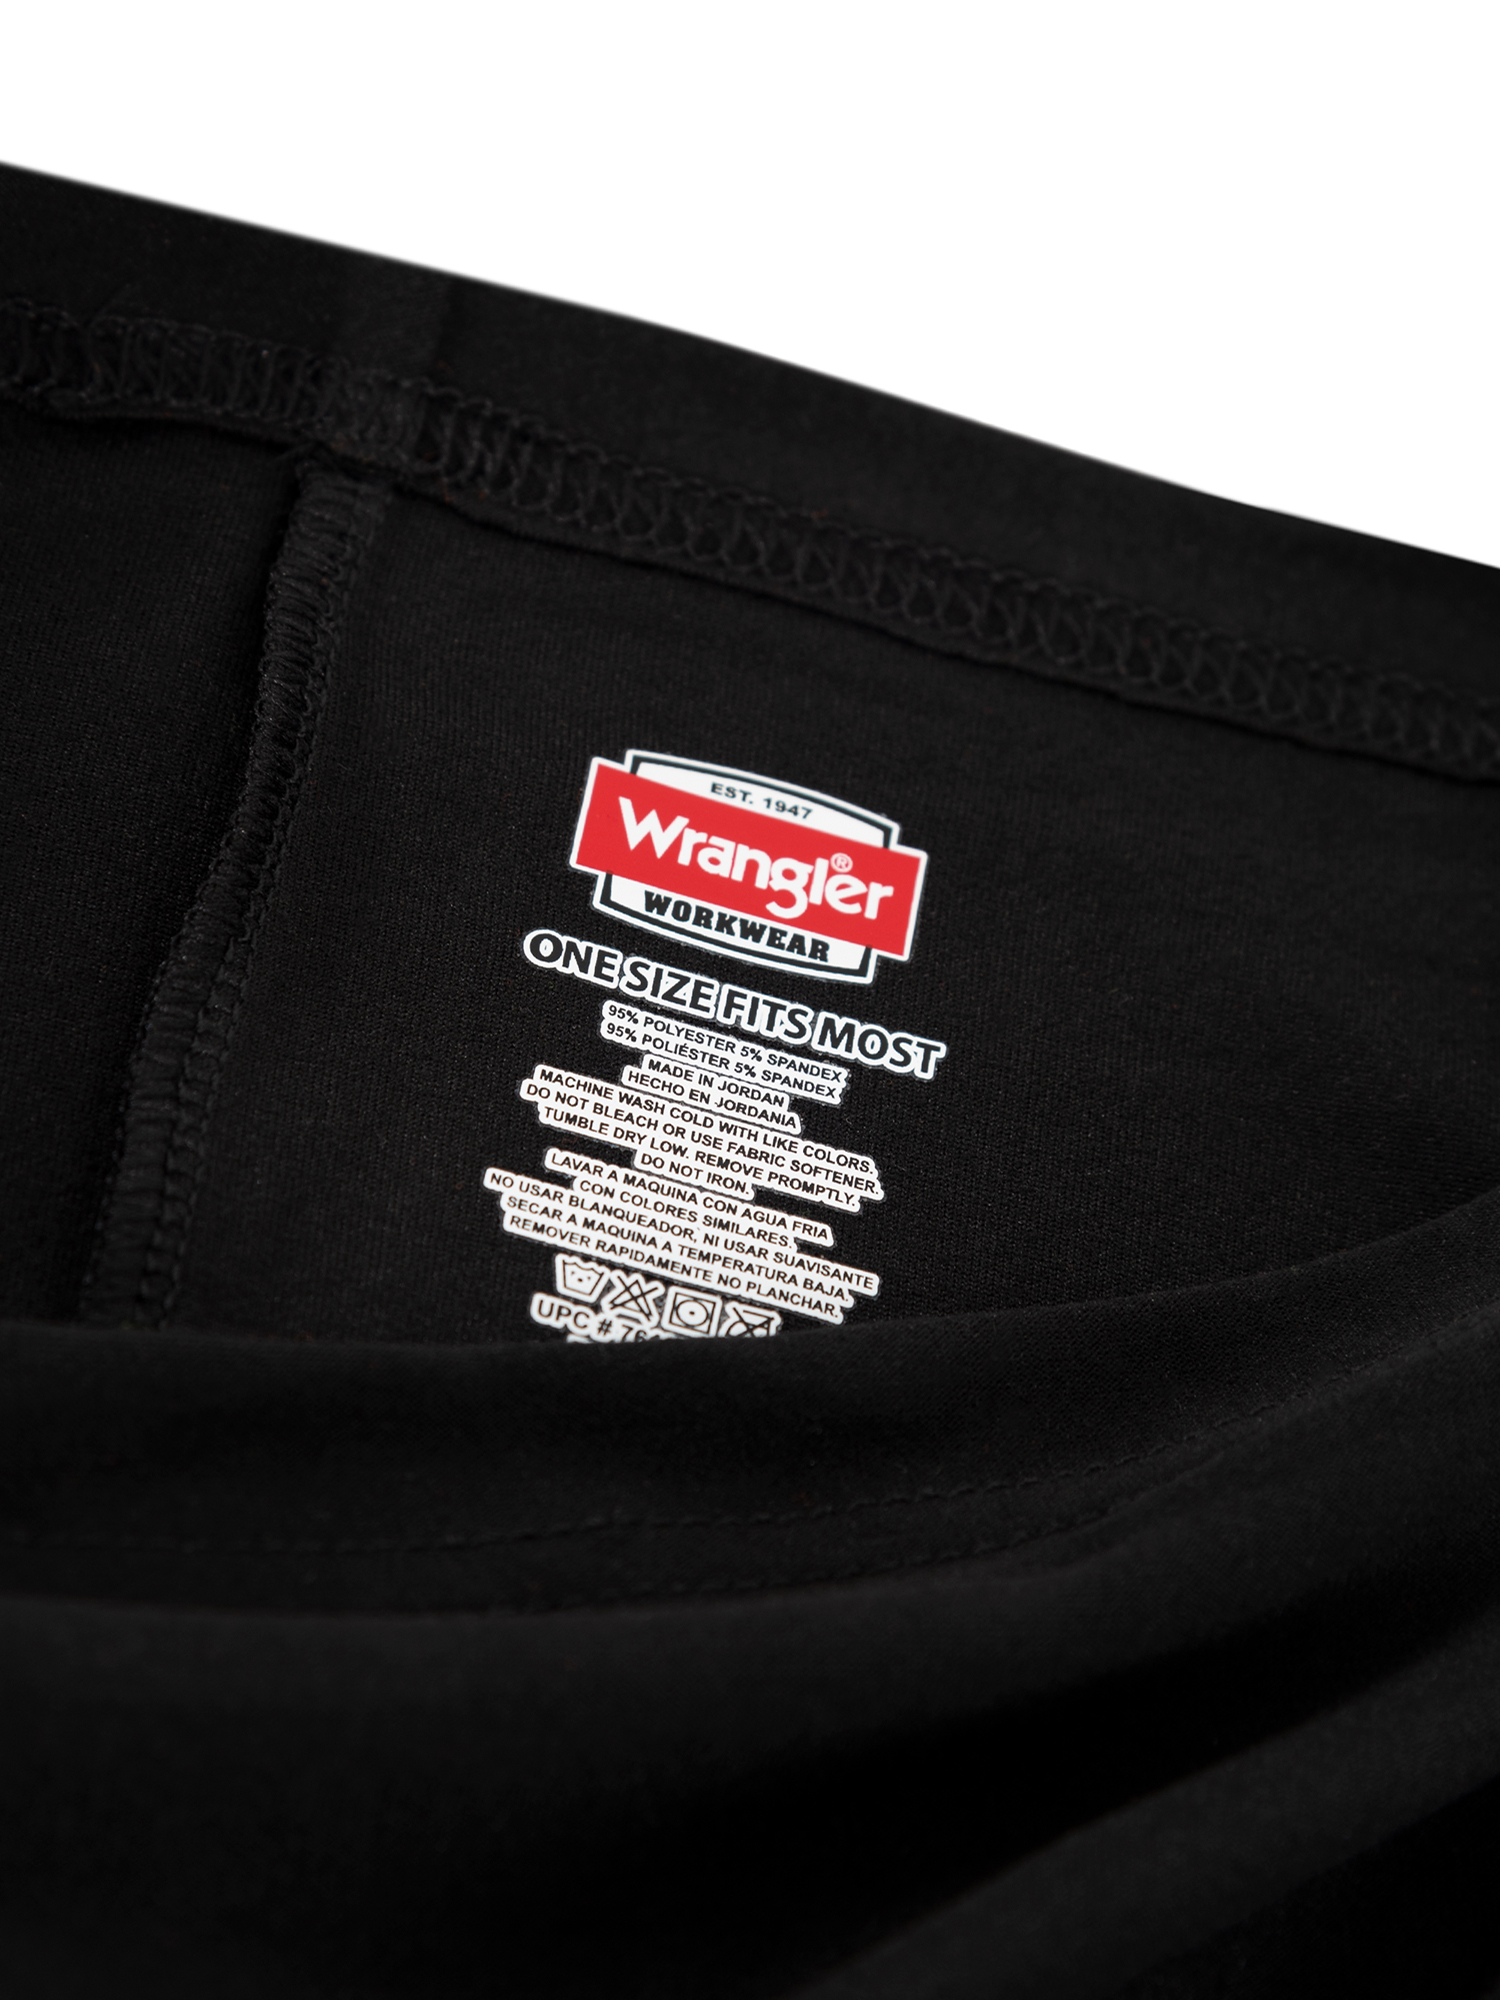 Wrangler Men's Workwear Neck Gaiter Multi-colored 3-Pack - image 4 of 6